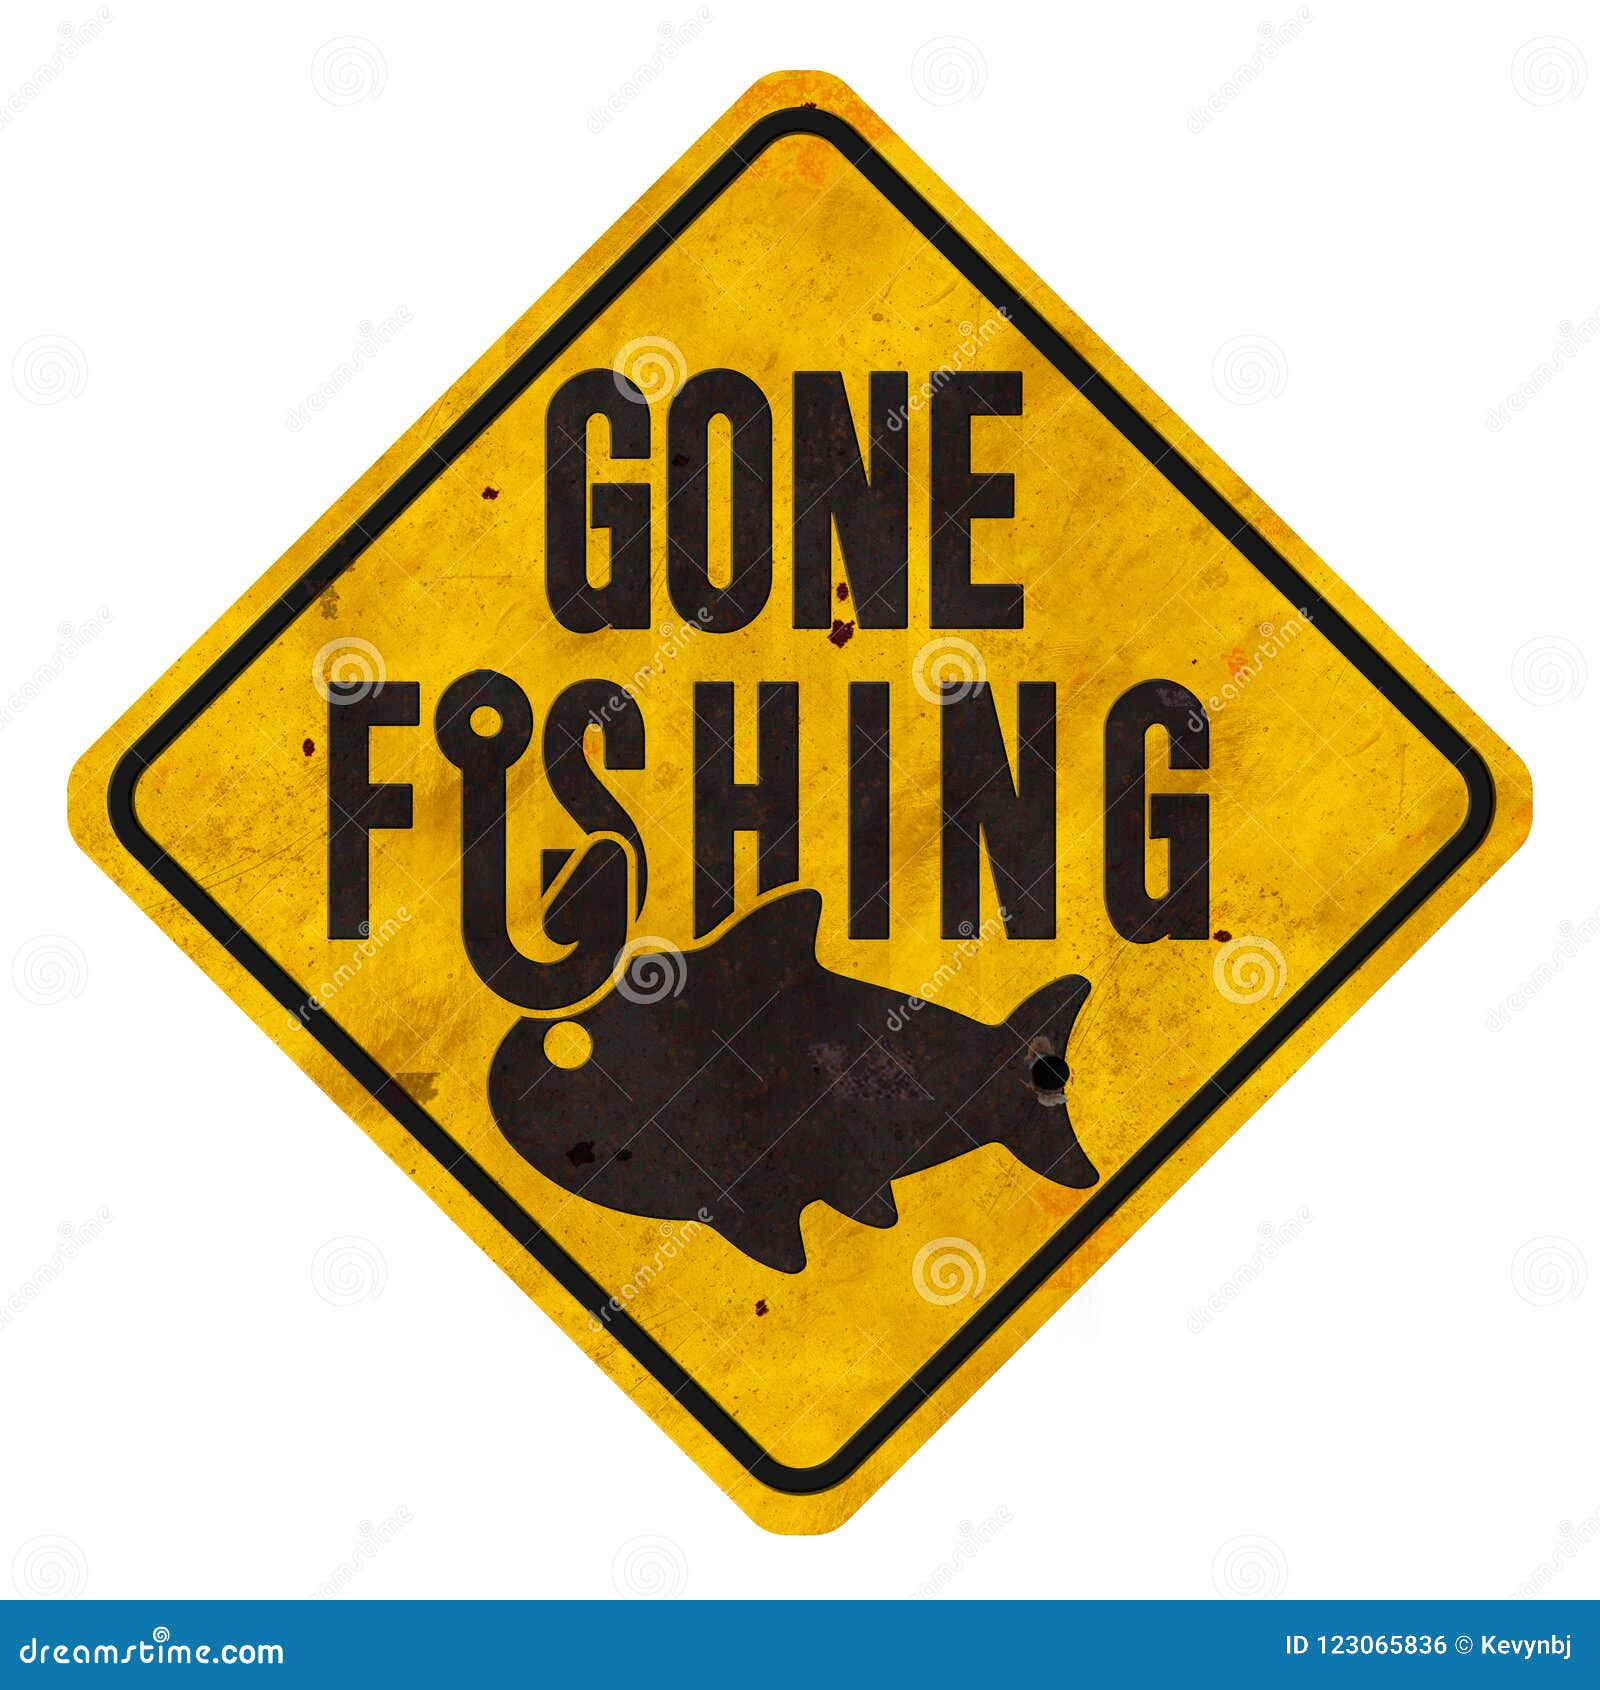 Gone Fishing Royalty-Free Stock Image | CartoonDealer.com #1123102